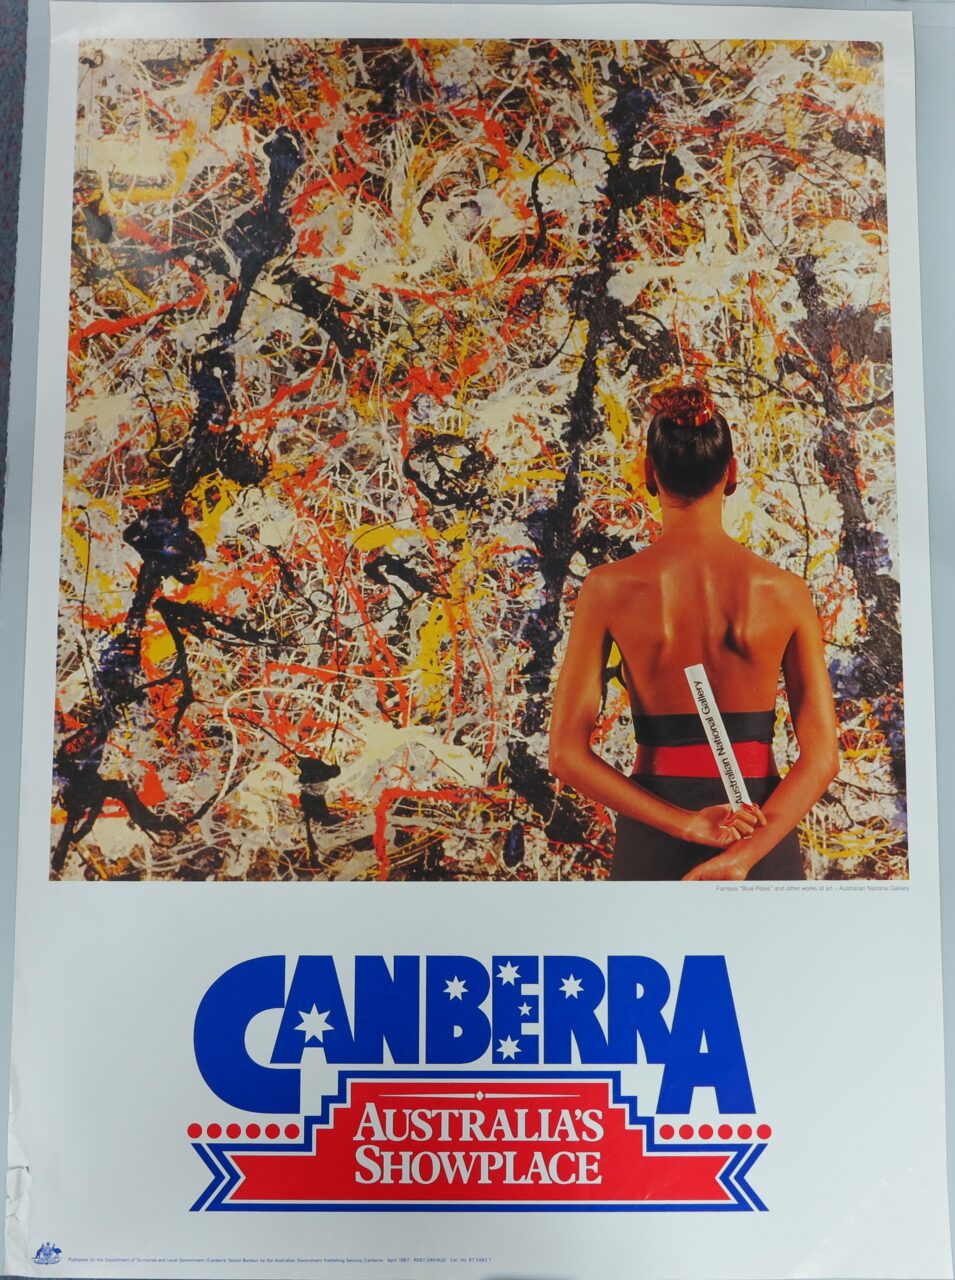 Canberra Australia’s Showplace National Gallery of Australia